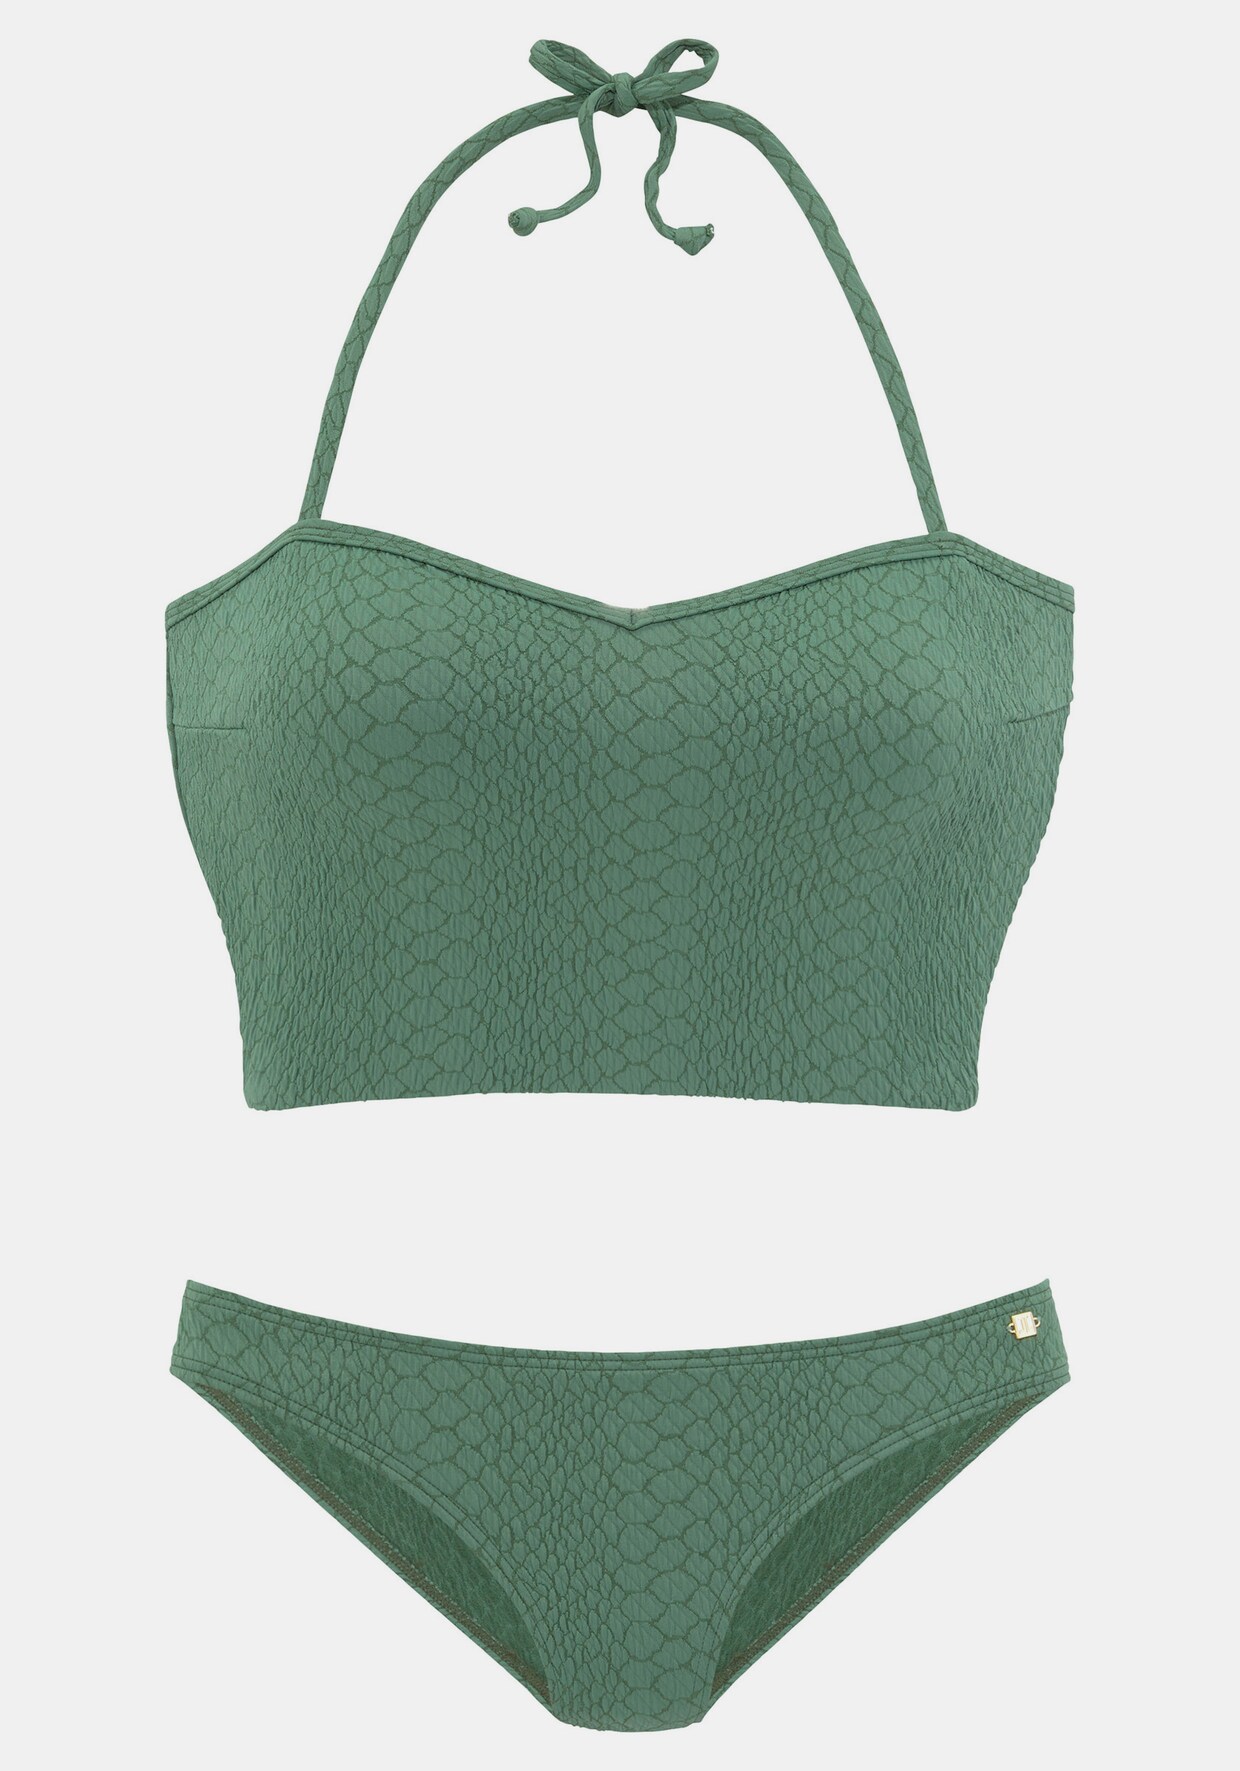 JETTE Bustier-Bikini-Top - grün